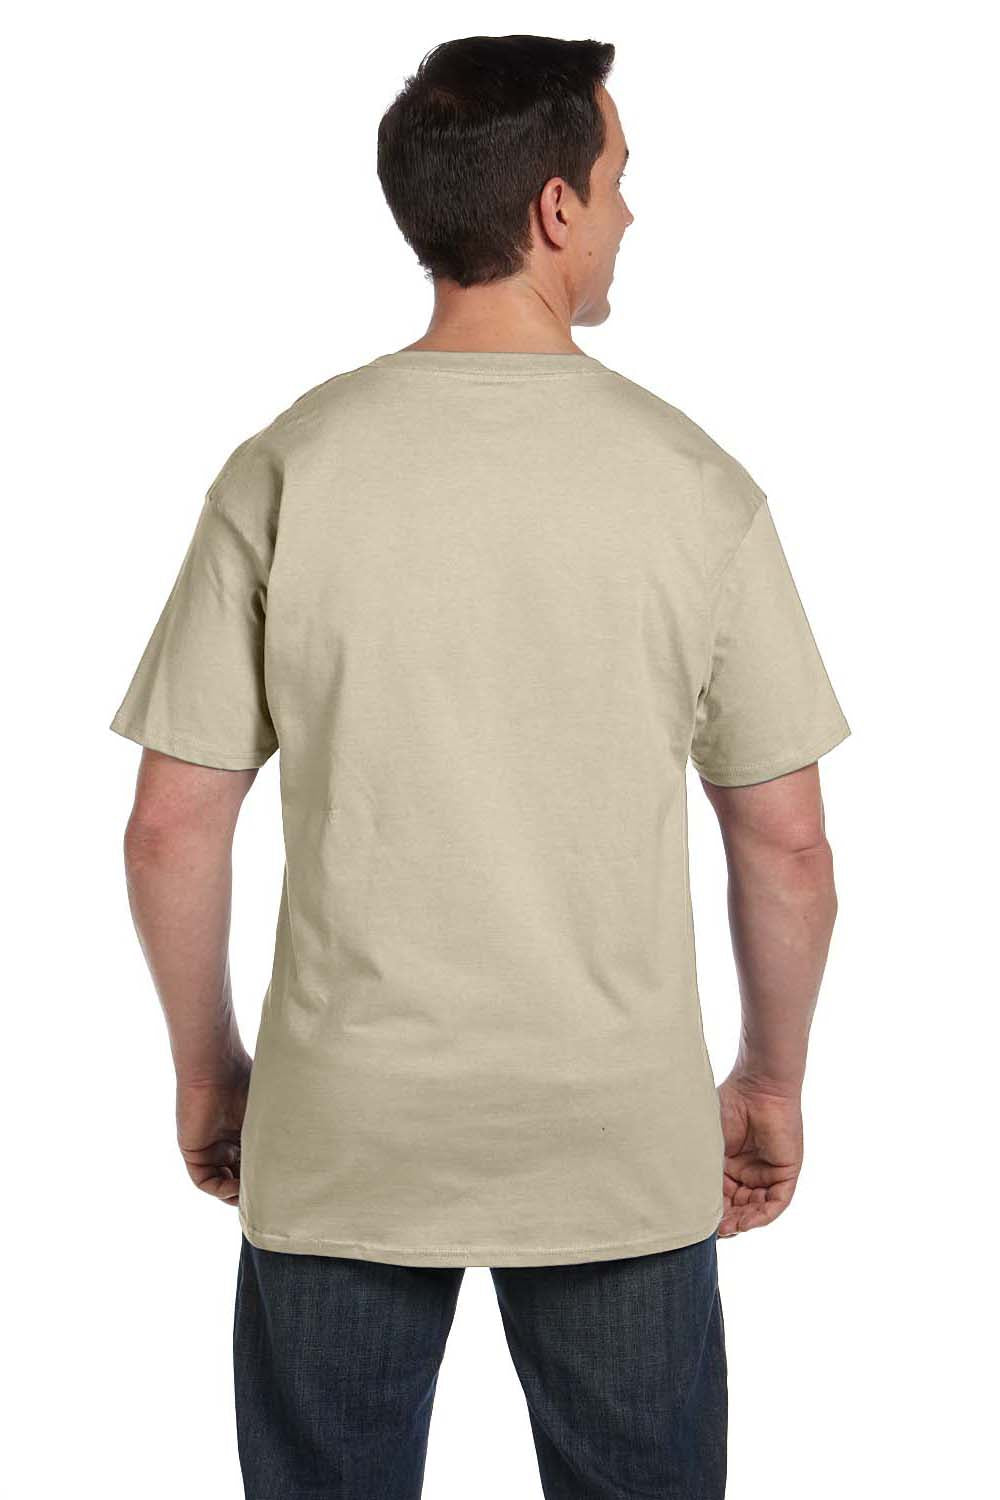 Hanes 5190P Mens Beefy-T Short Sleeve Crewneck T-Shirt w/ Pocket Sand Brown Back